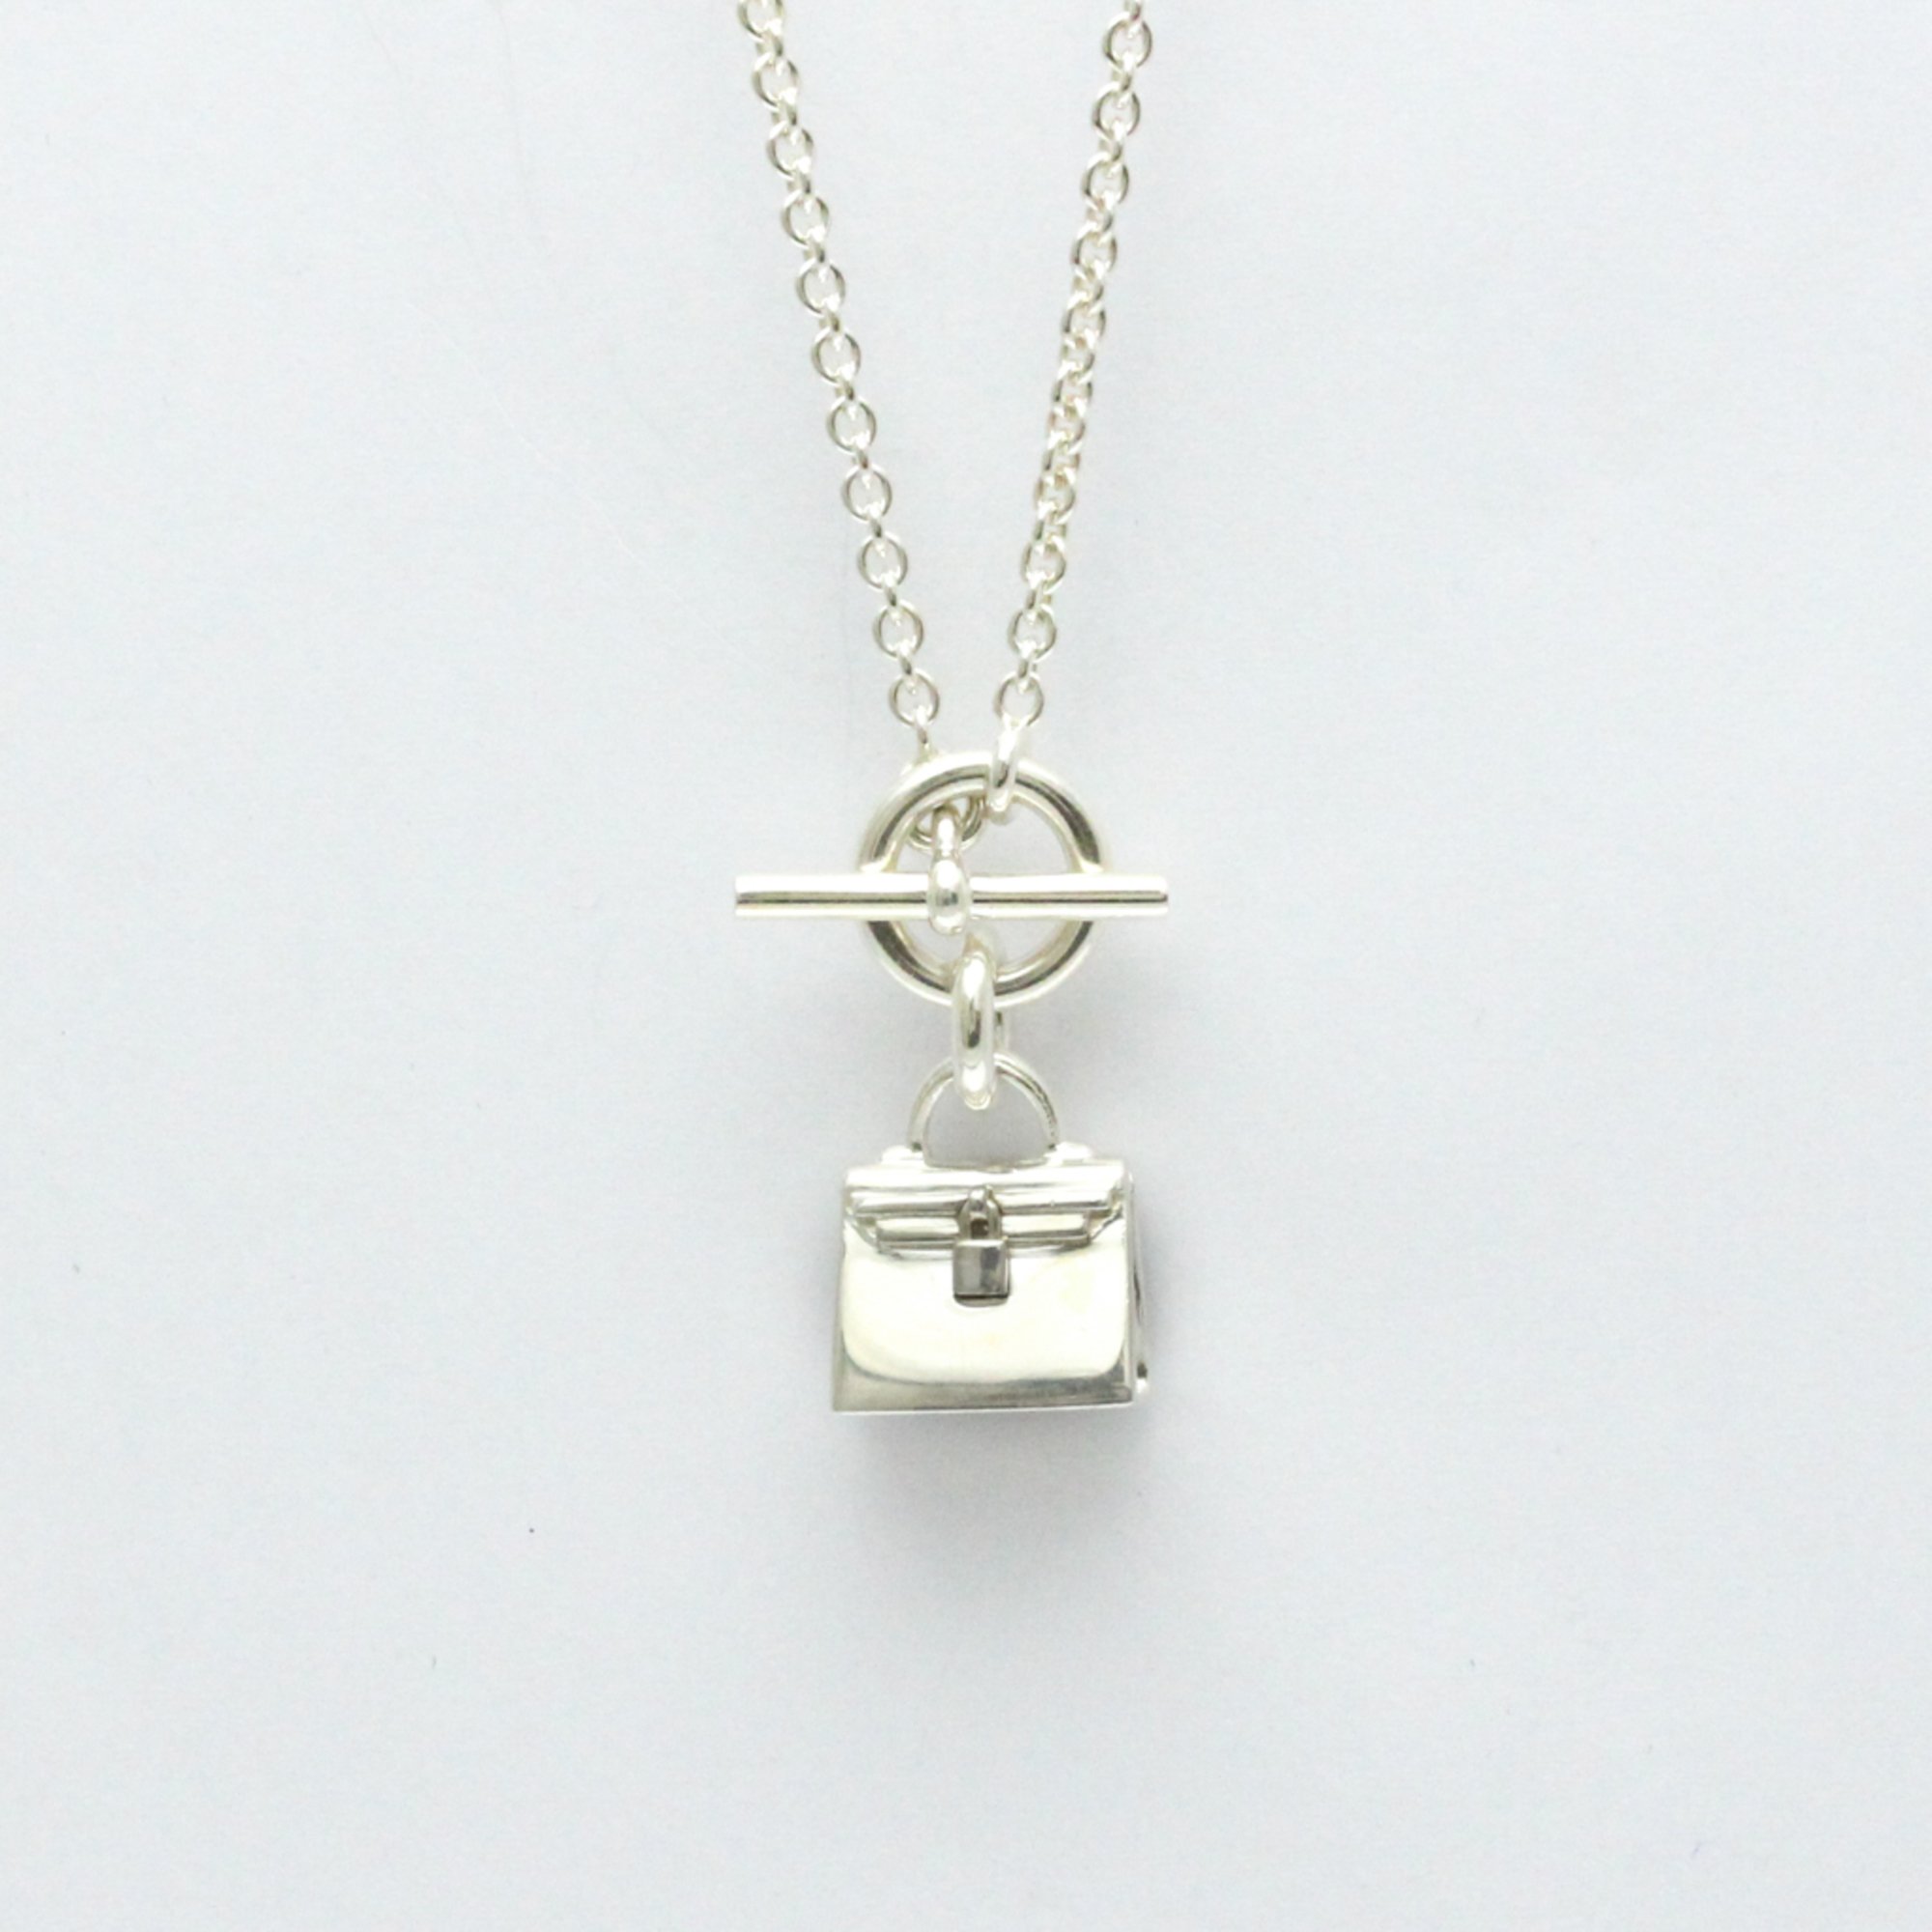 Hermes Kelly Motif Necklace Silver 925 No Stone Women,Men Fashion Pendant Necklace (Silver)